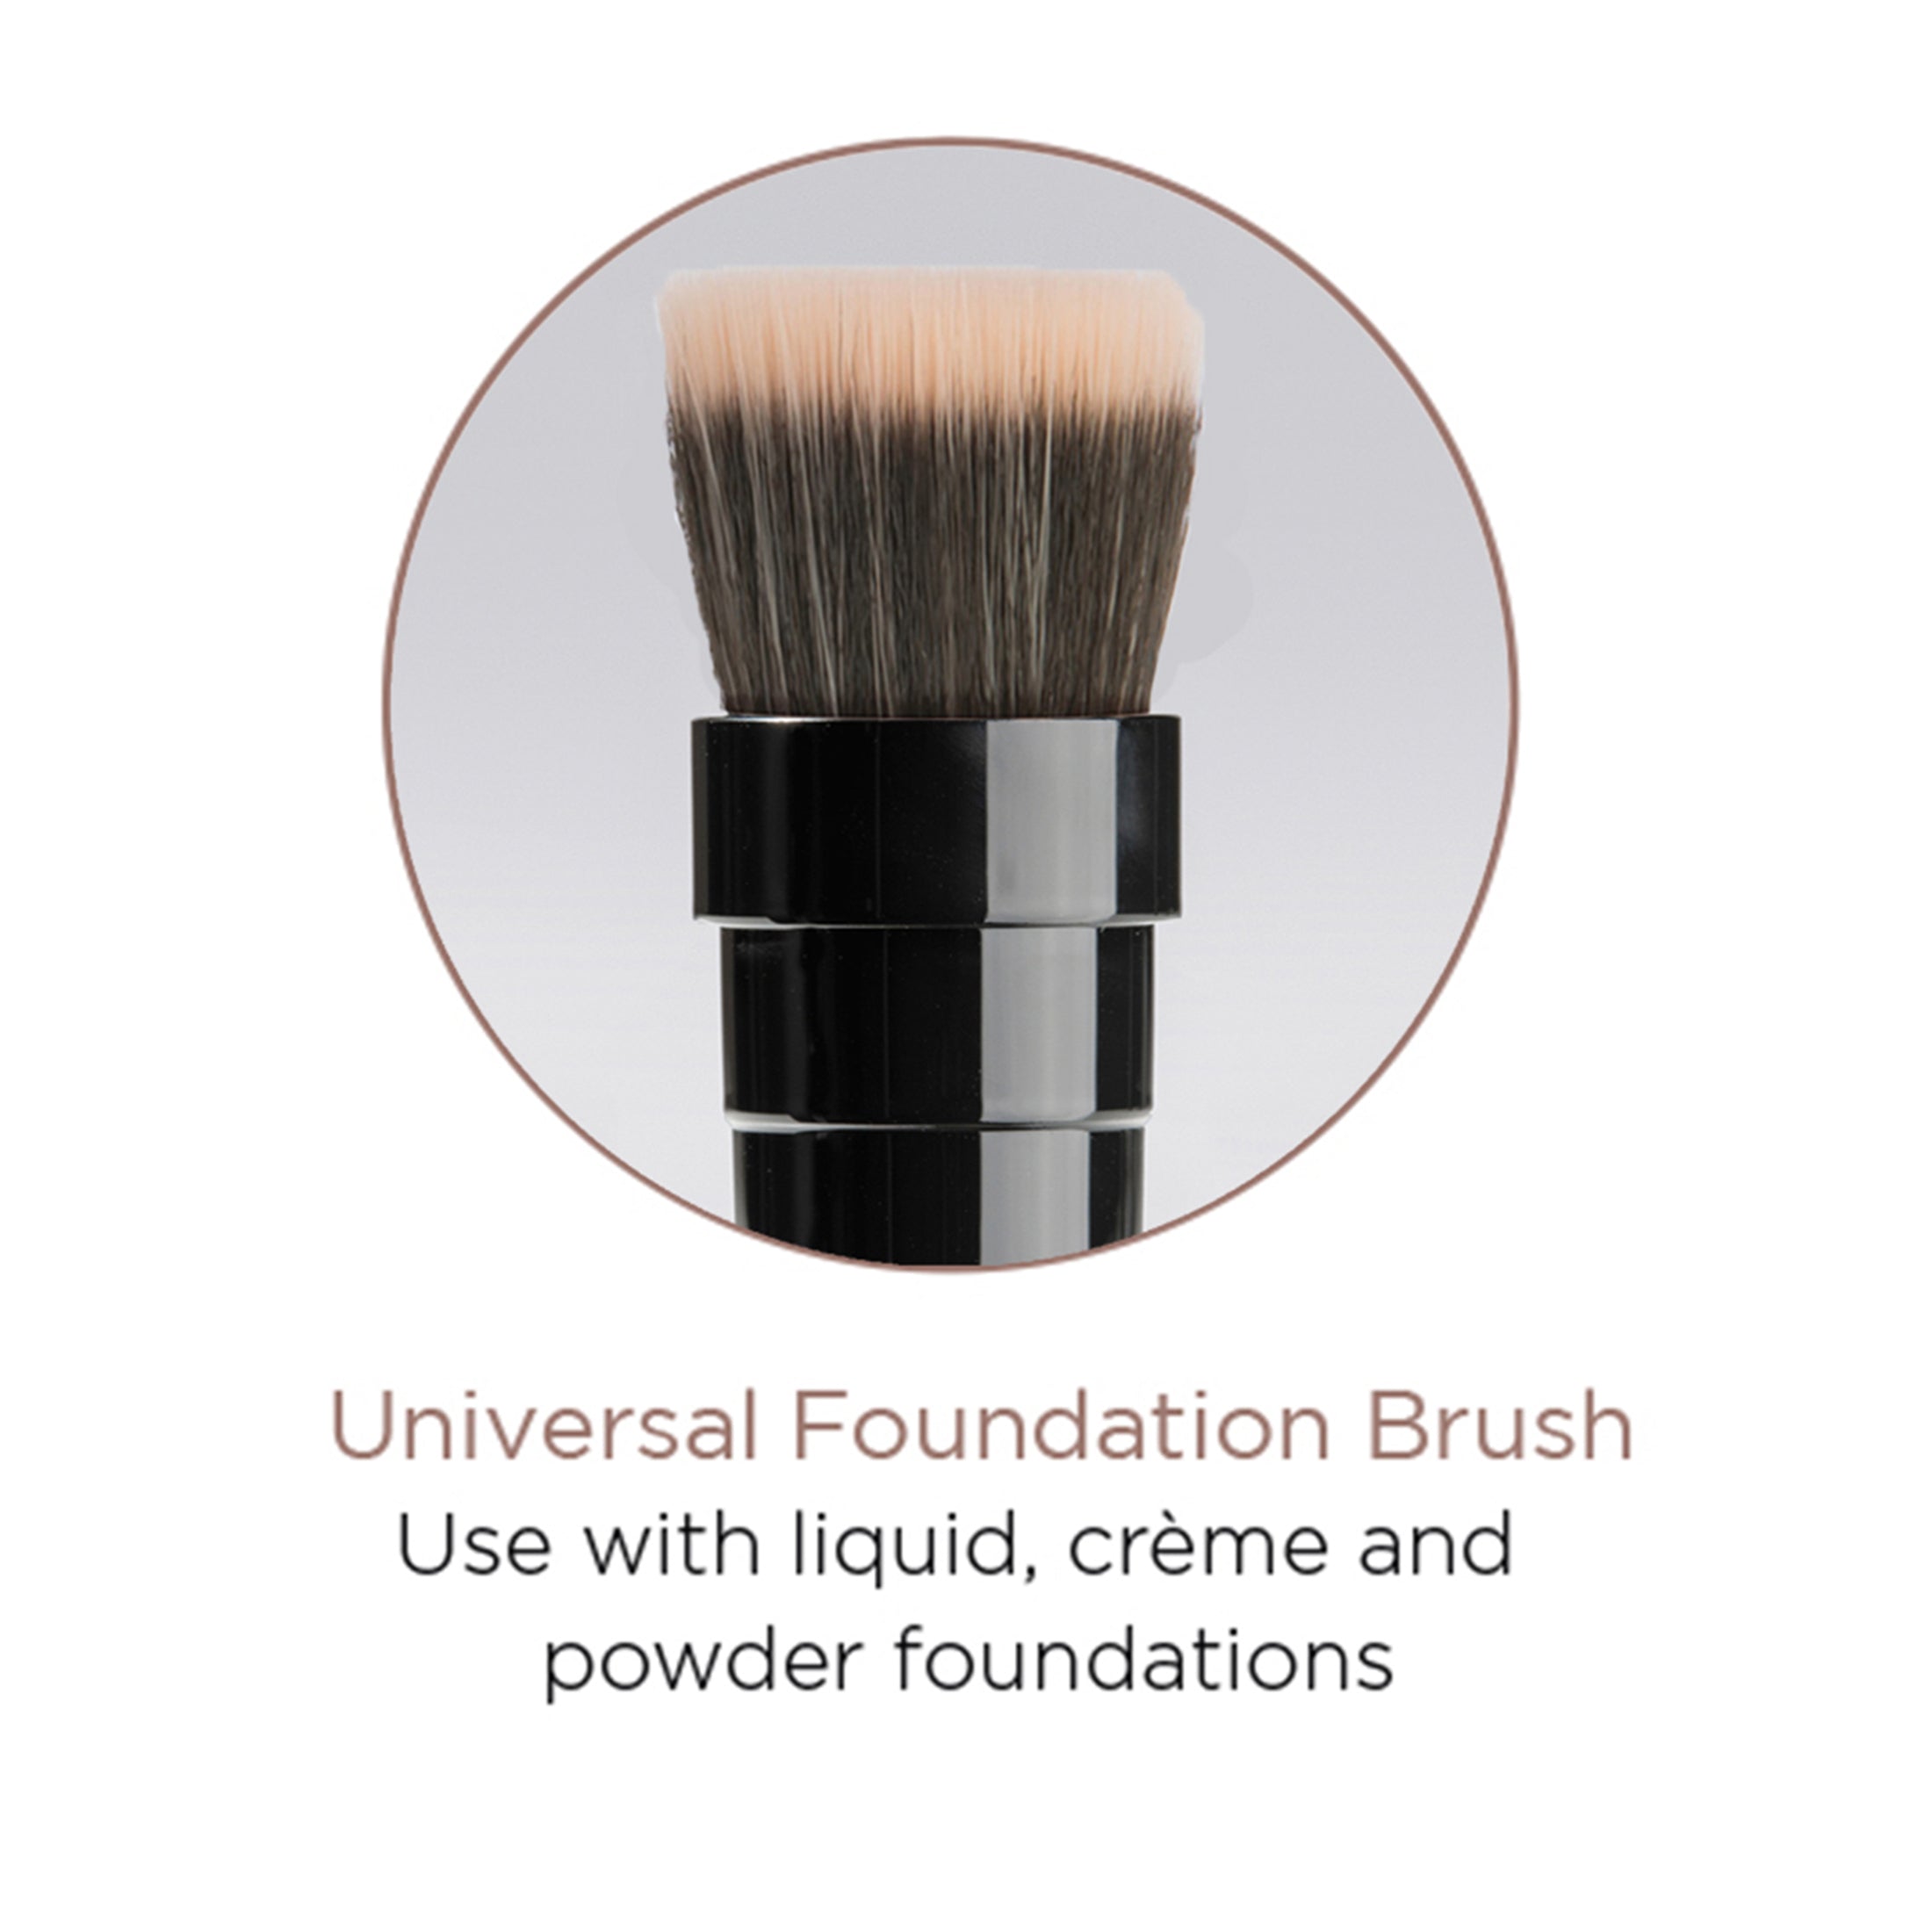 Universal Foundation Brush Head - New Premium Soft Fibers